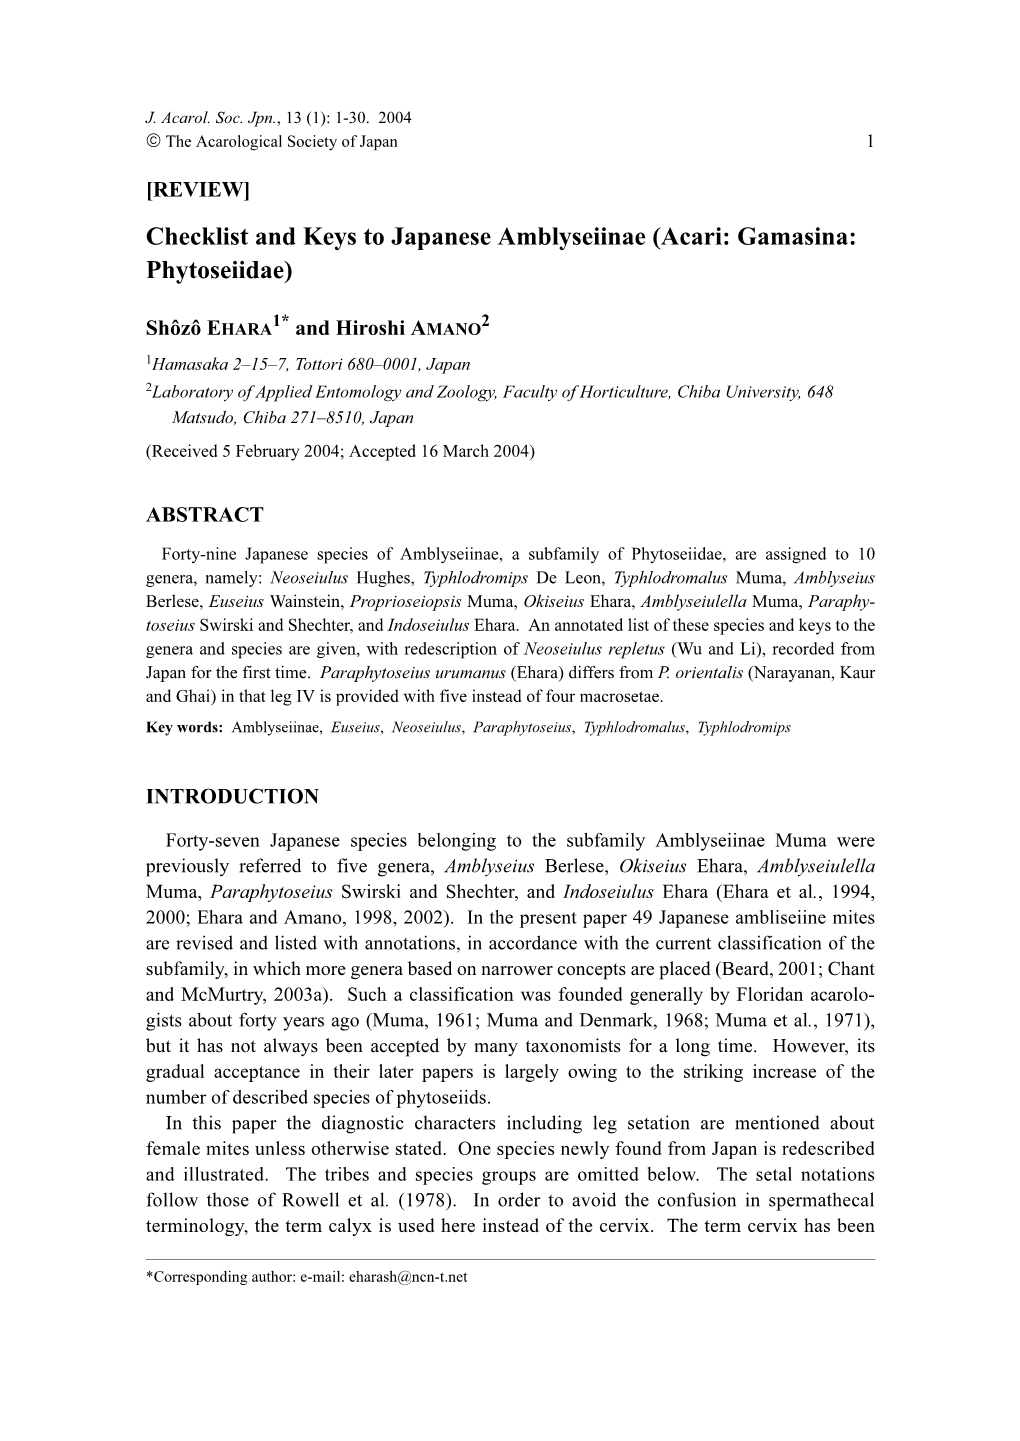 Checklist and Keys to Japanese Amblyseiinae (Acari: Gamasina: Phytoseiidae)